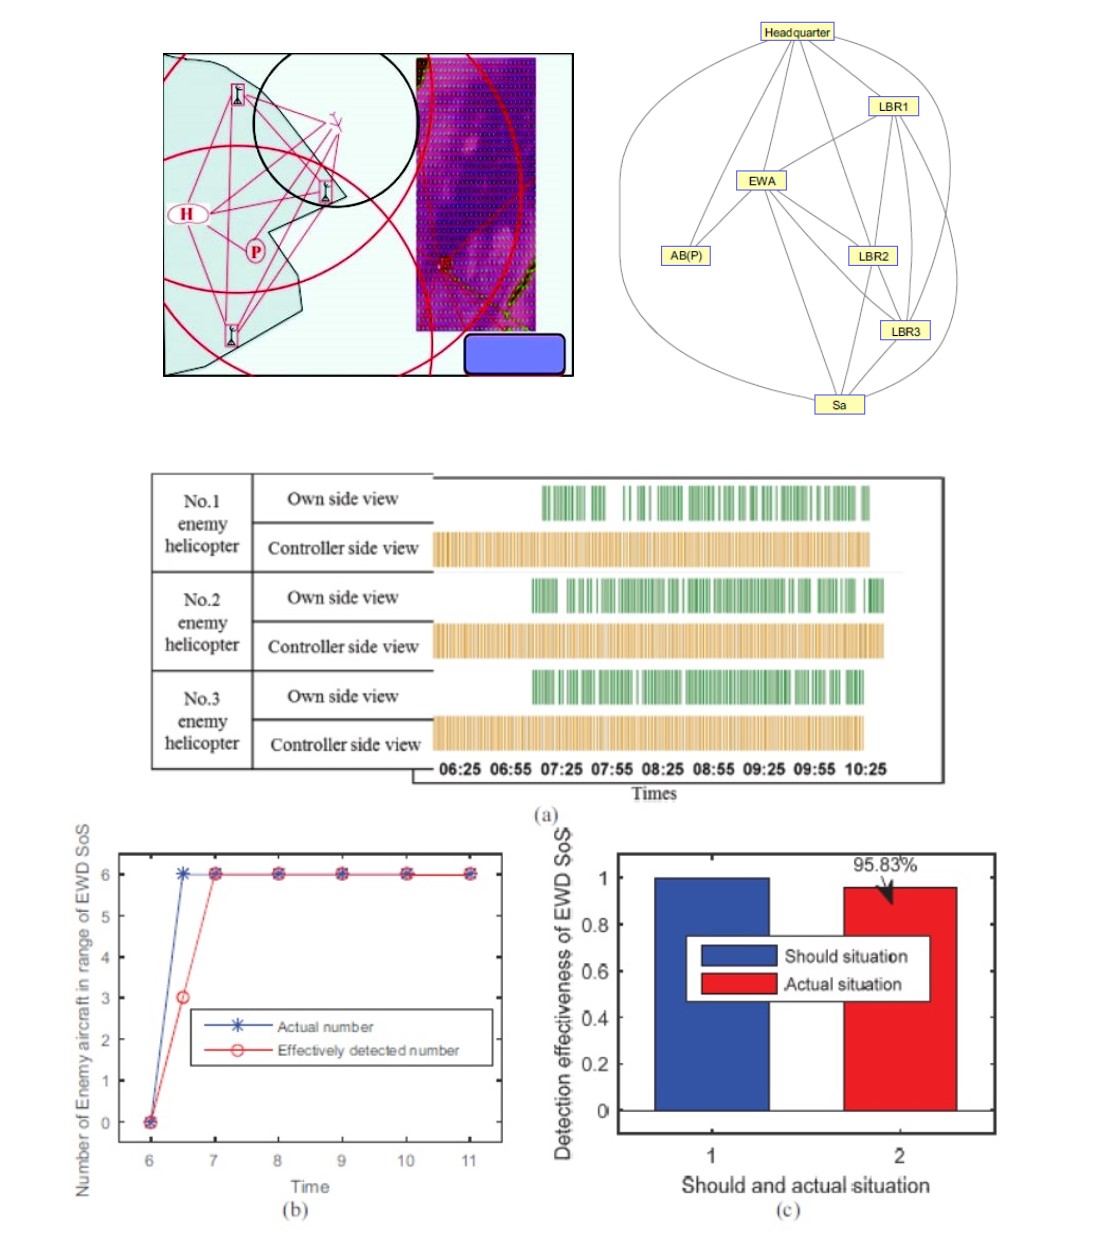 Framework of detection effectiveness estimation based on multi-angle data and visualization analysis